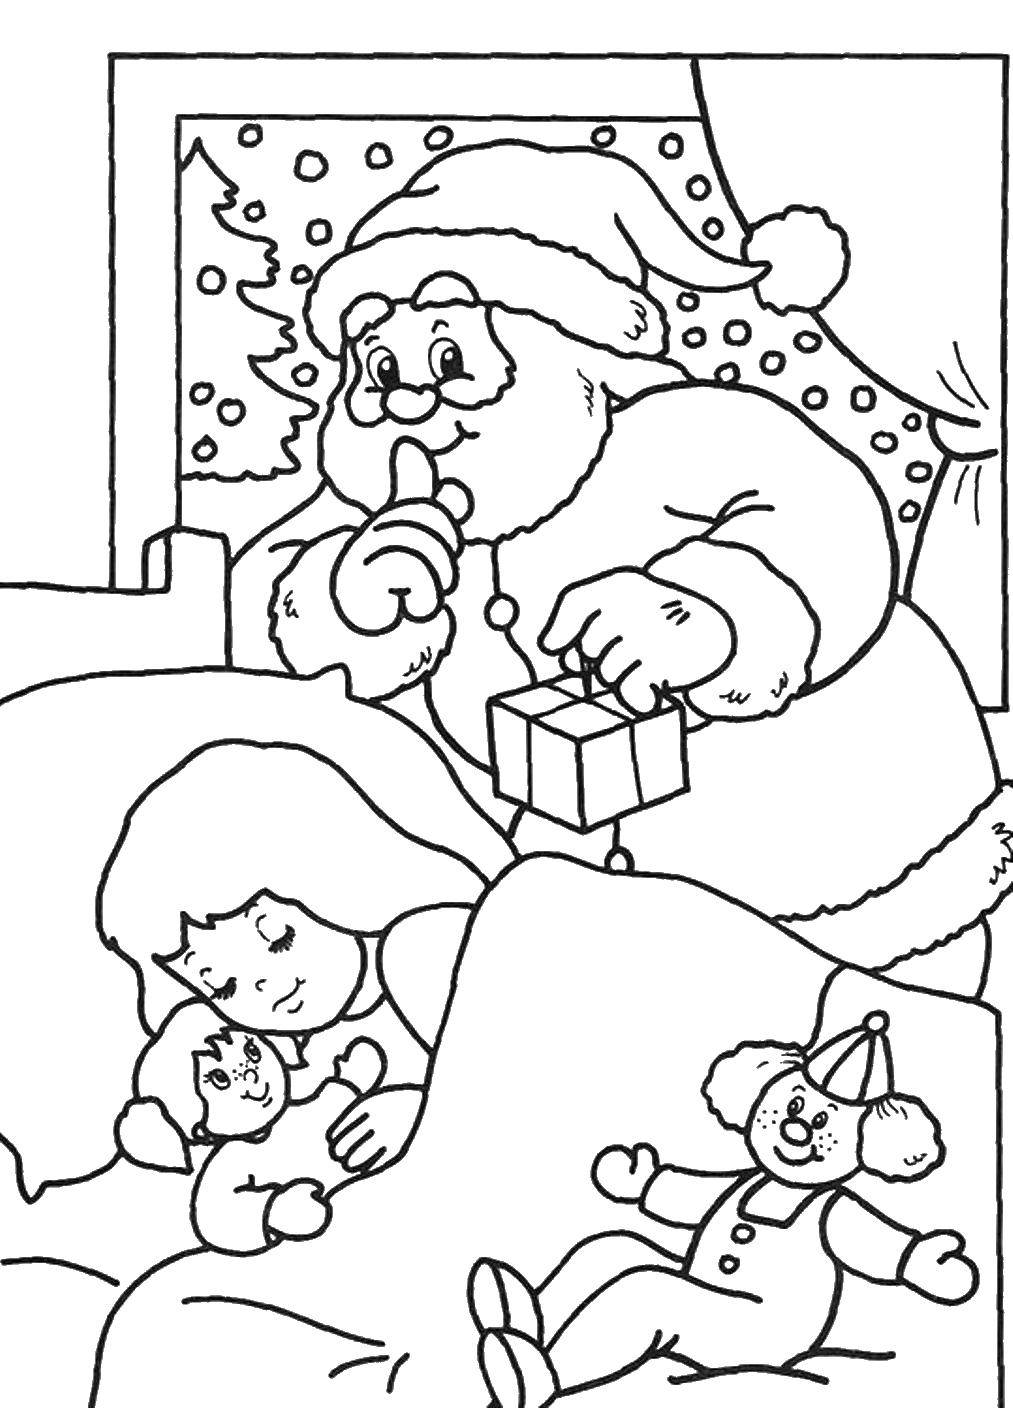 Coloring Santa Claus brought gifts. Category Christmas. Tags:  Santa Claus, Christmas.